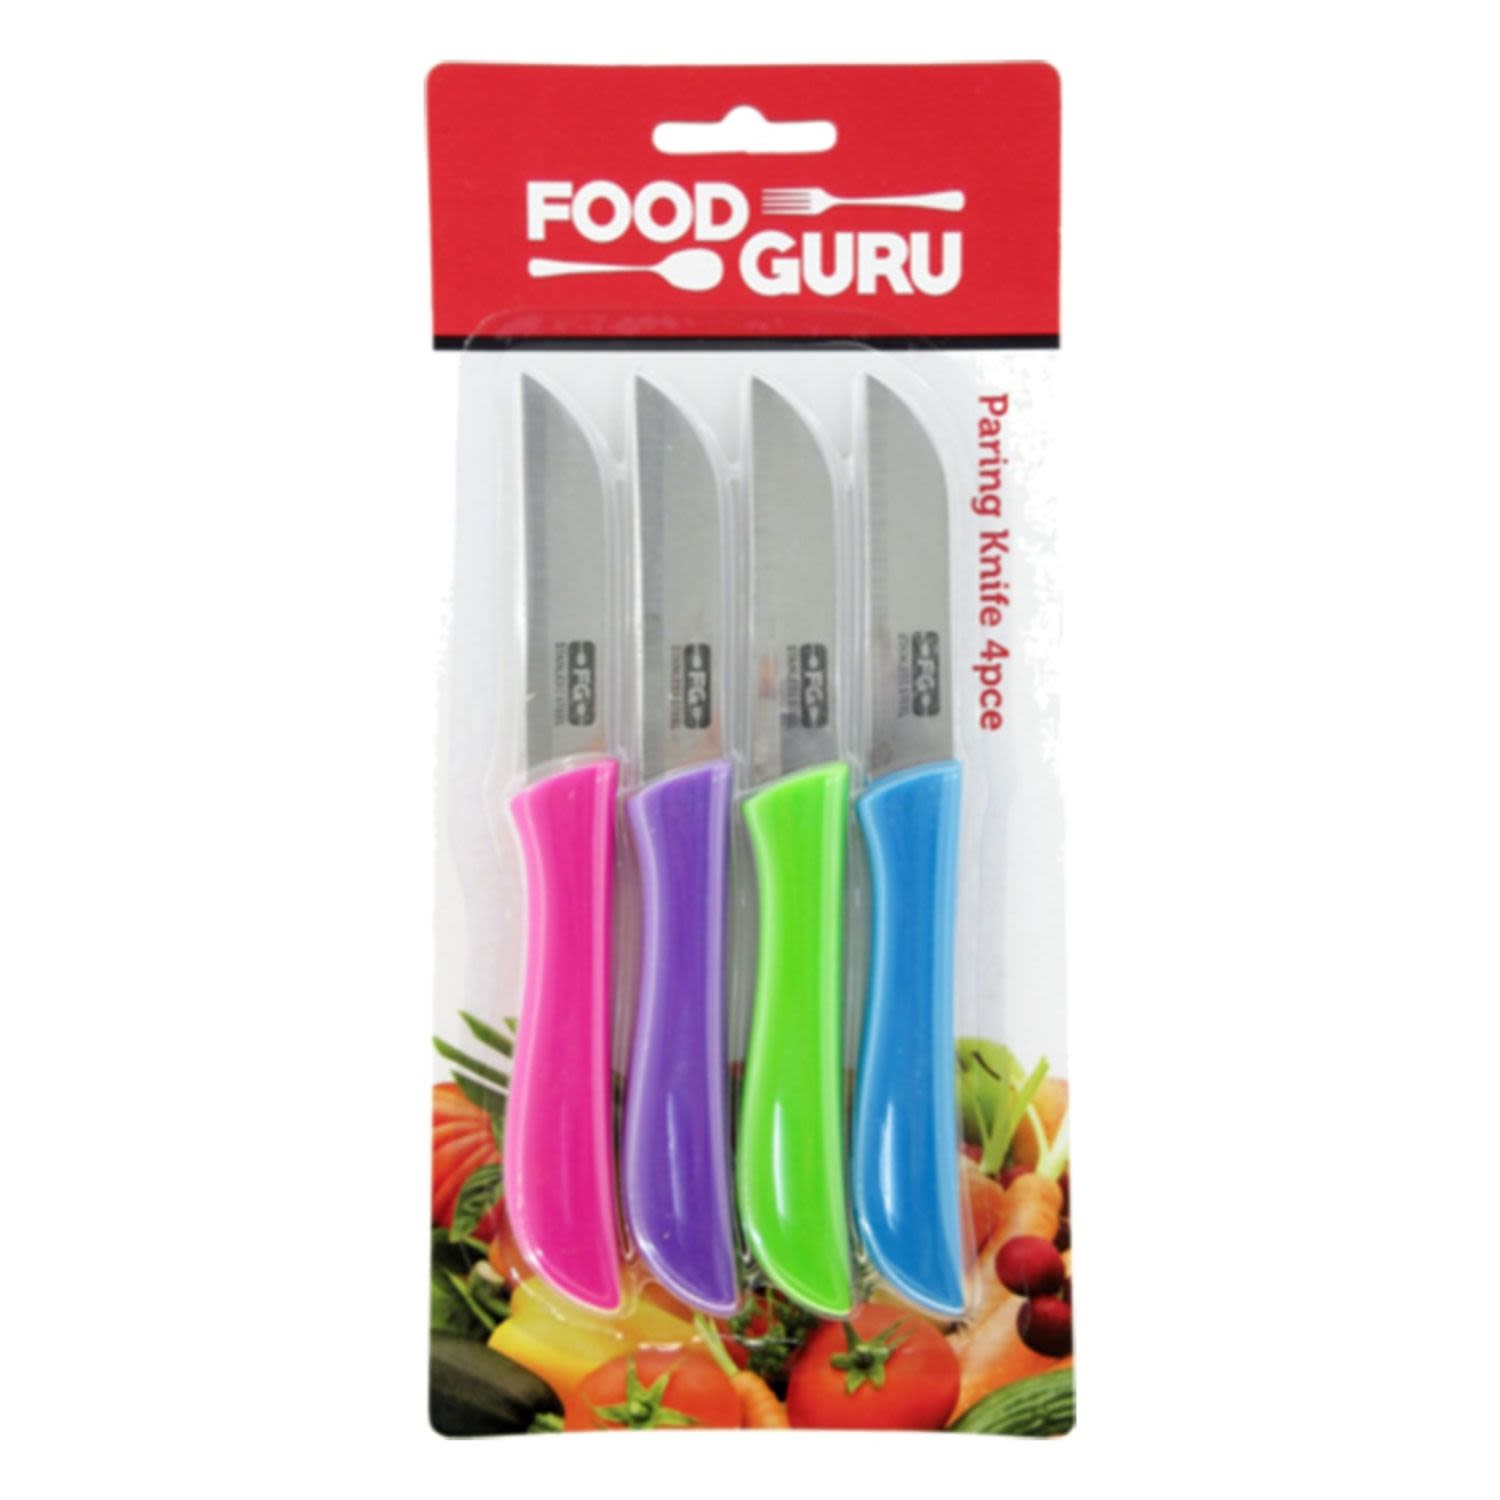 Food Guru Plastic Knife, 4 Each